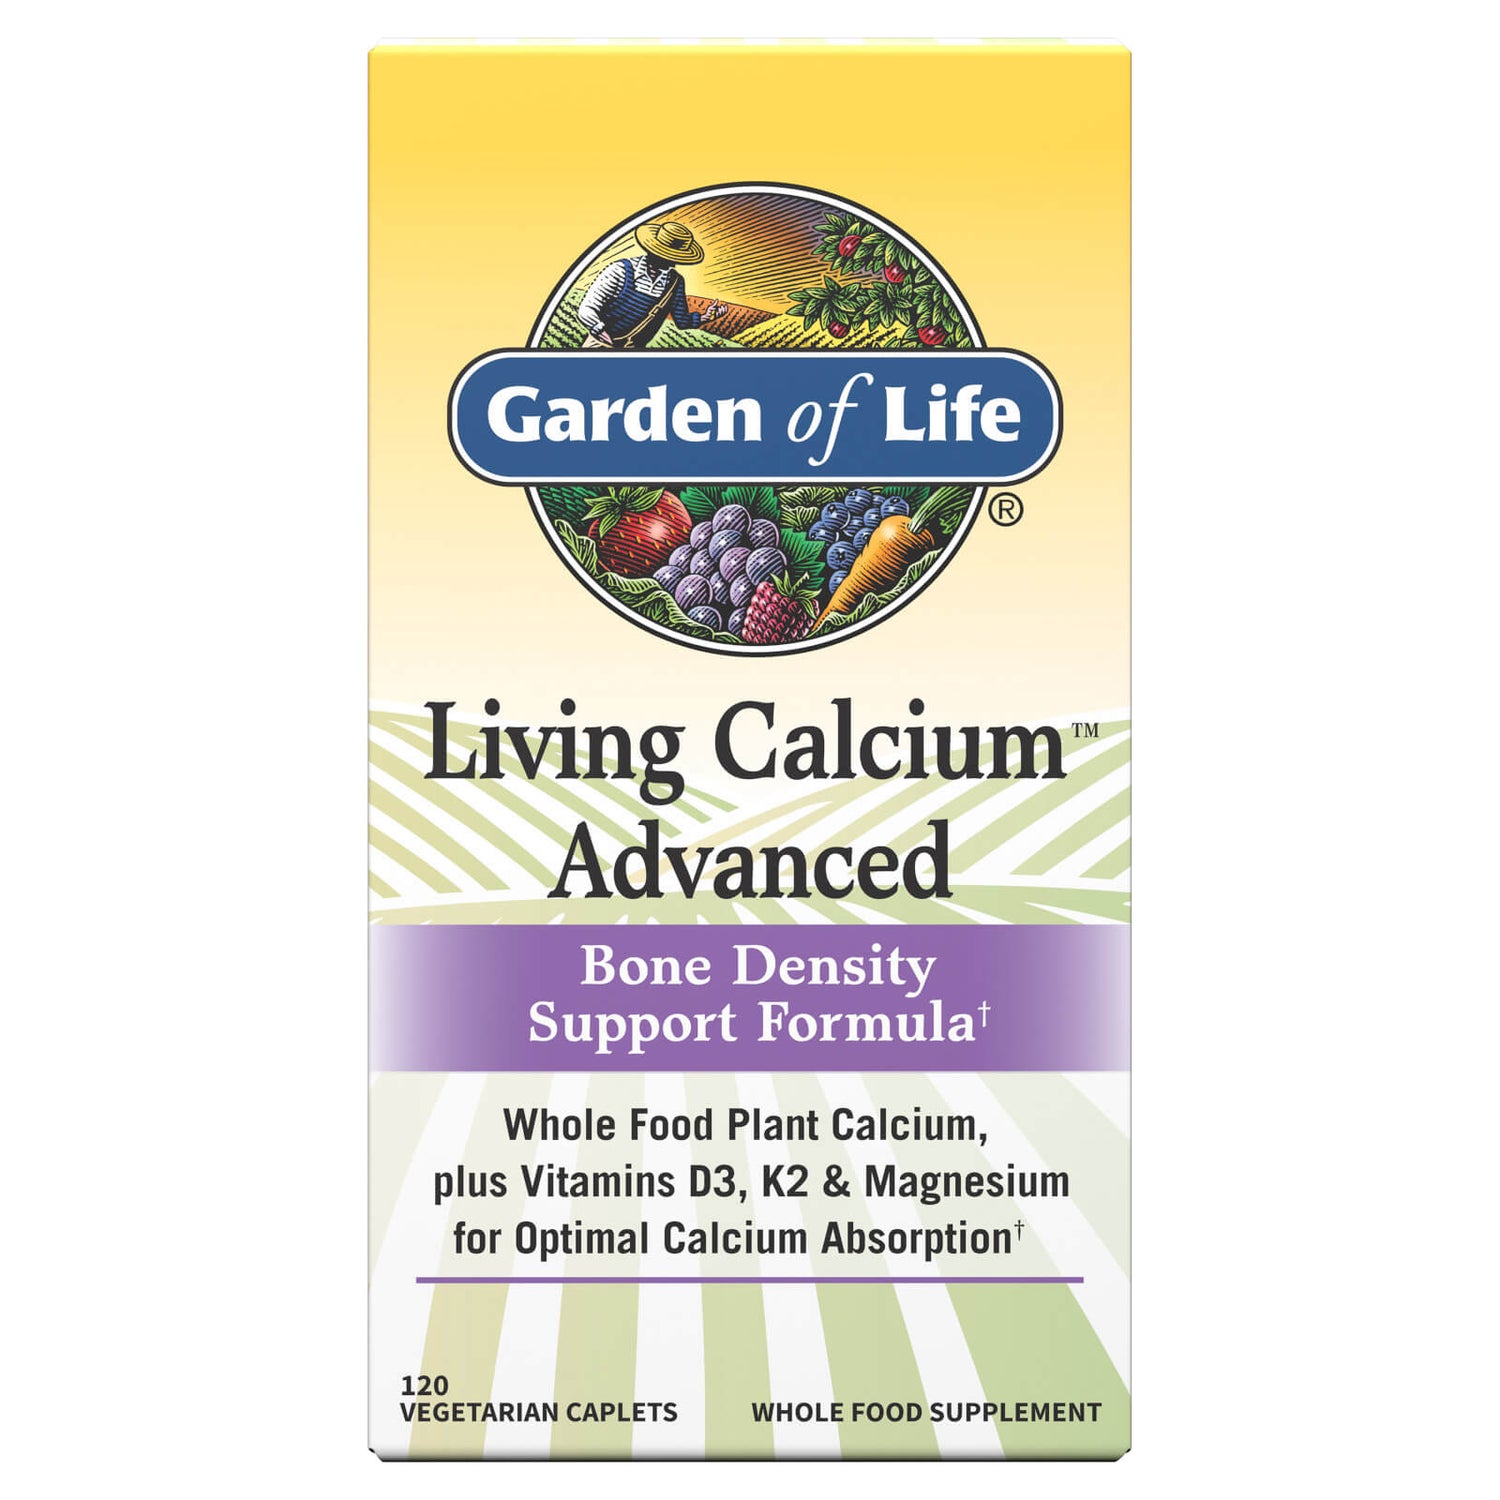 Garden of Life Living Calcium Advanced - 120 Tablets